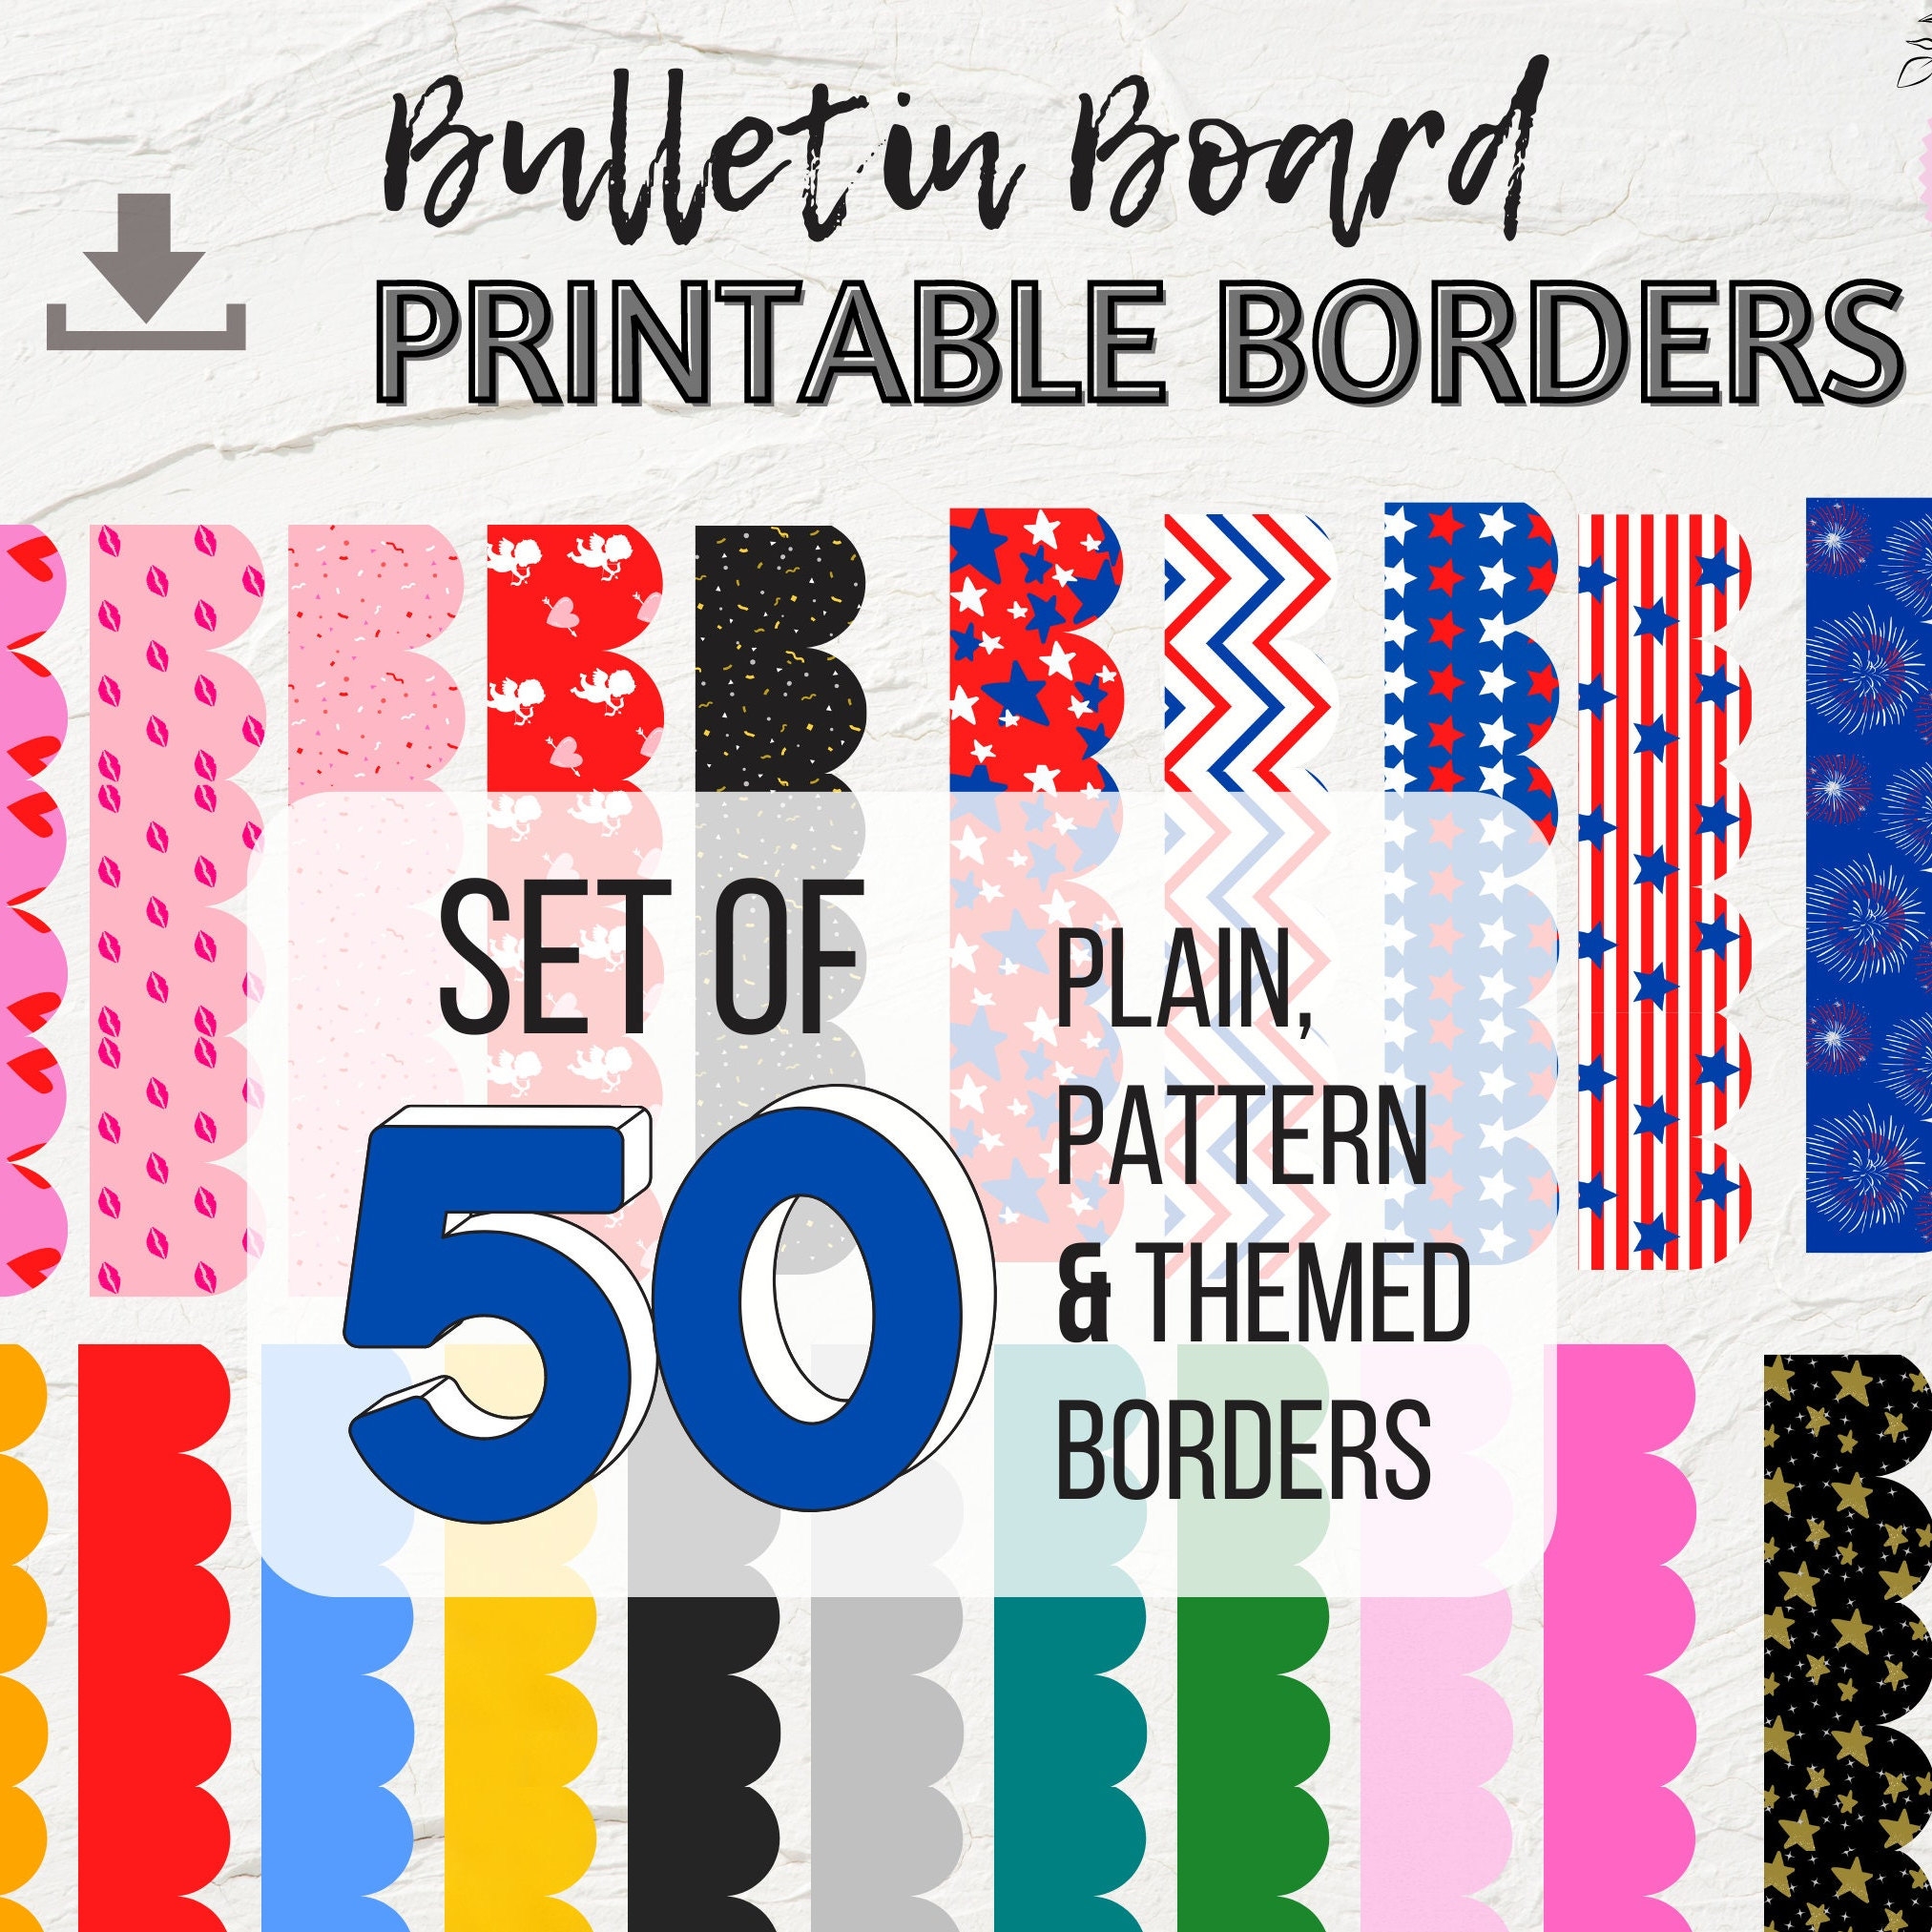 Printable Bulletin Borders 50 Bulletin Board Borders Decorative Trimmers Board Edging Set Of 50 Plain Colors Seasonal Patterns Etsy